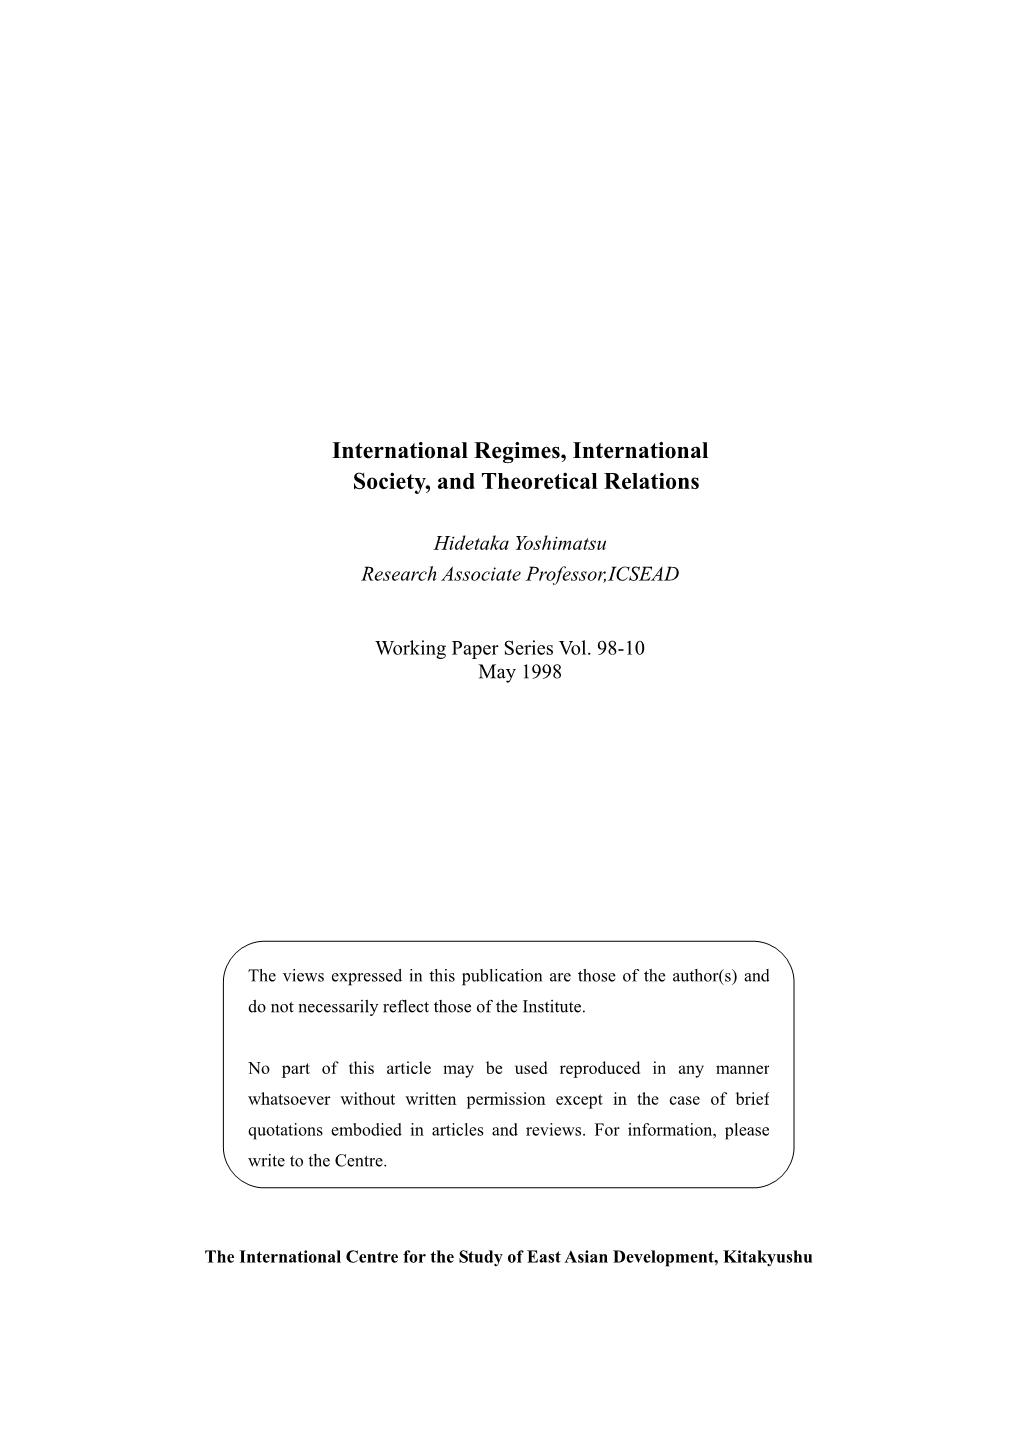 International Regimes, International Society, and Theoretical Relations